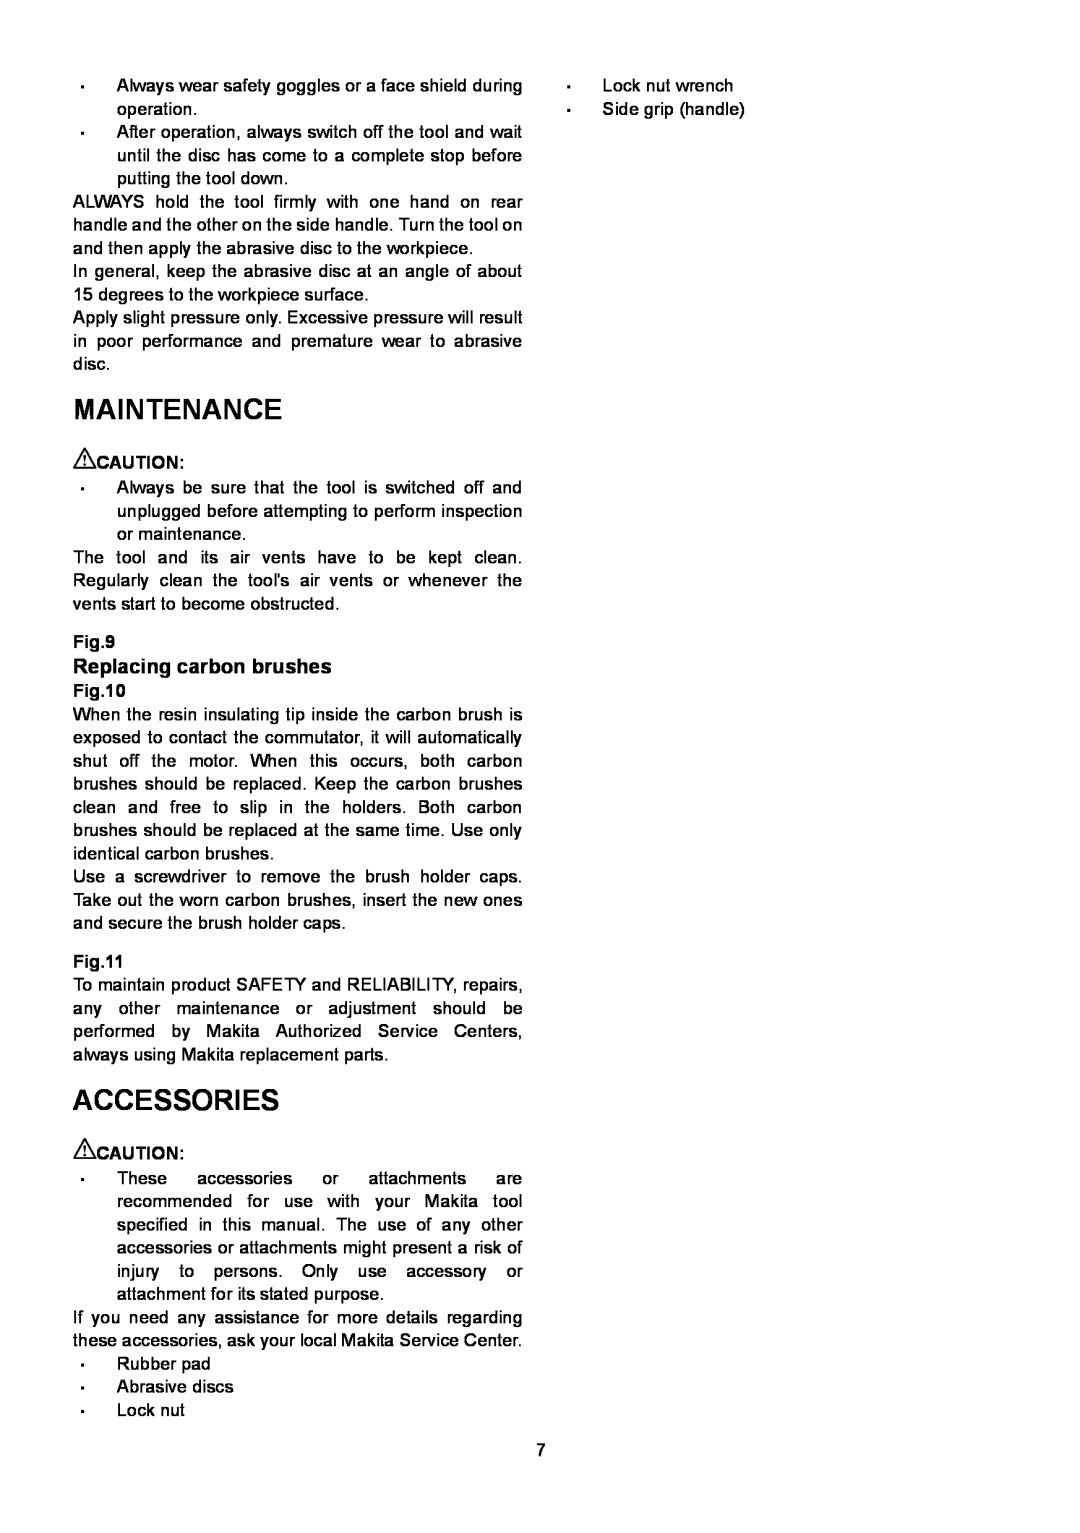 Makita SA7000C instruction manual Maintenance, Accessories, Replacing carbon brushes 